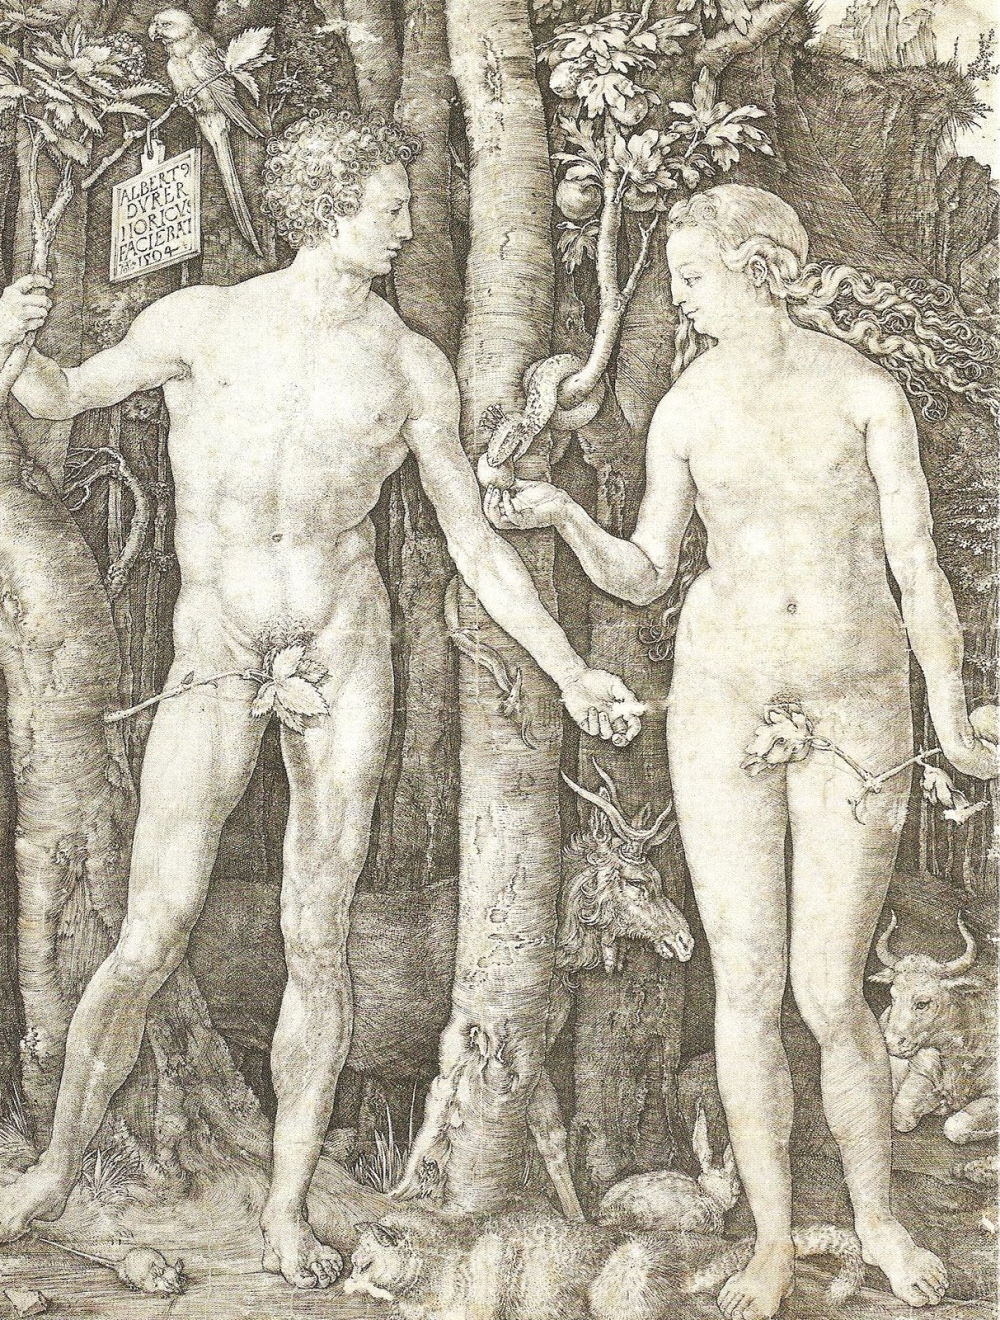 Adao e Eva by Albrecht Durer, 1504